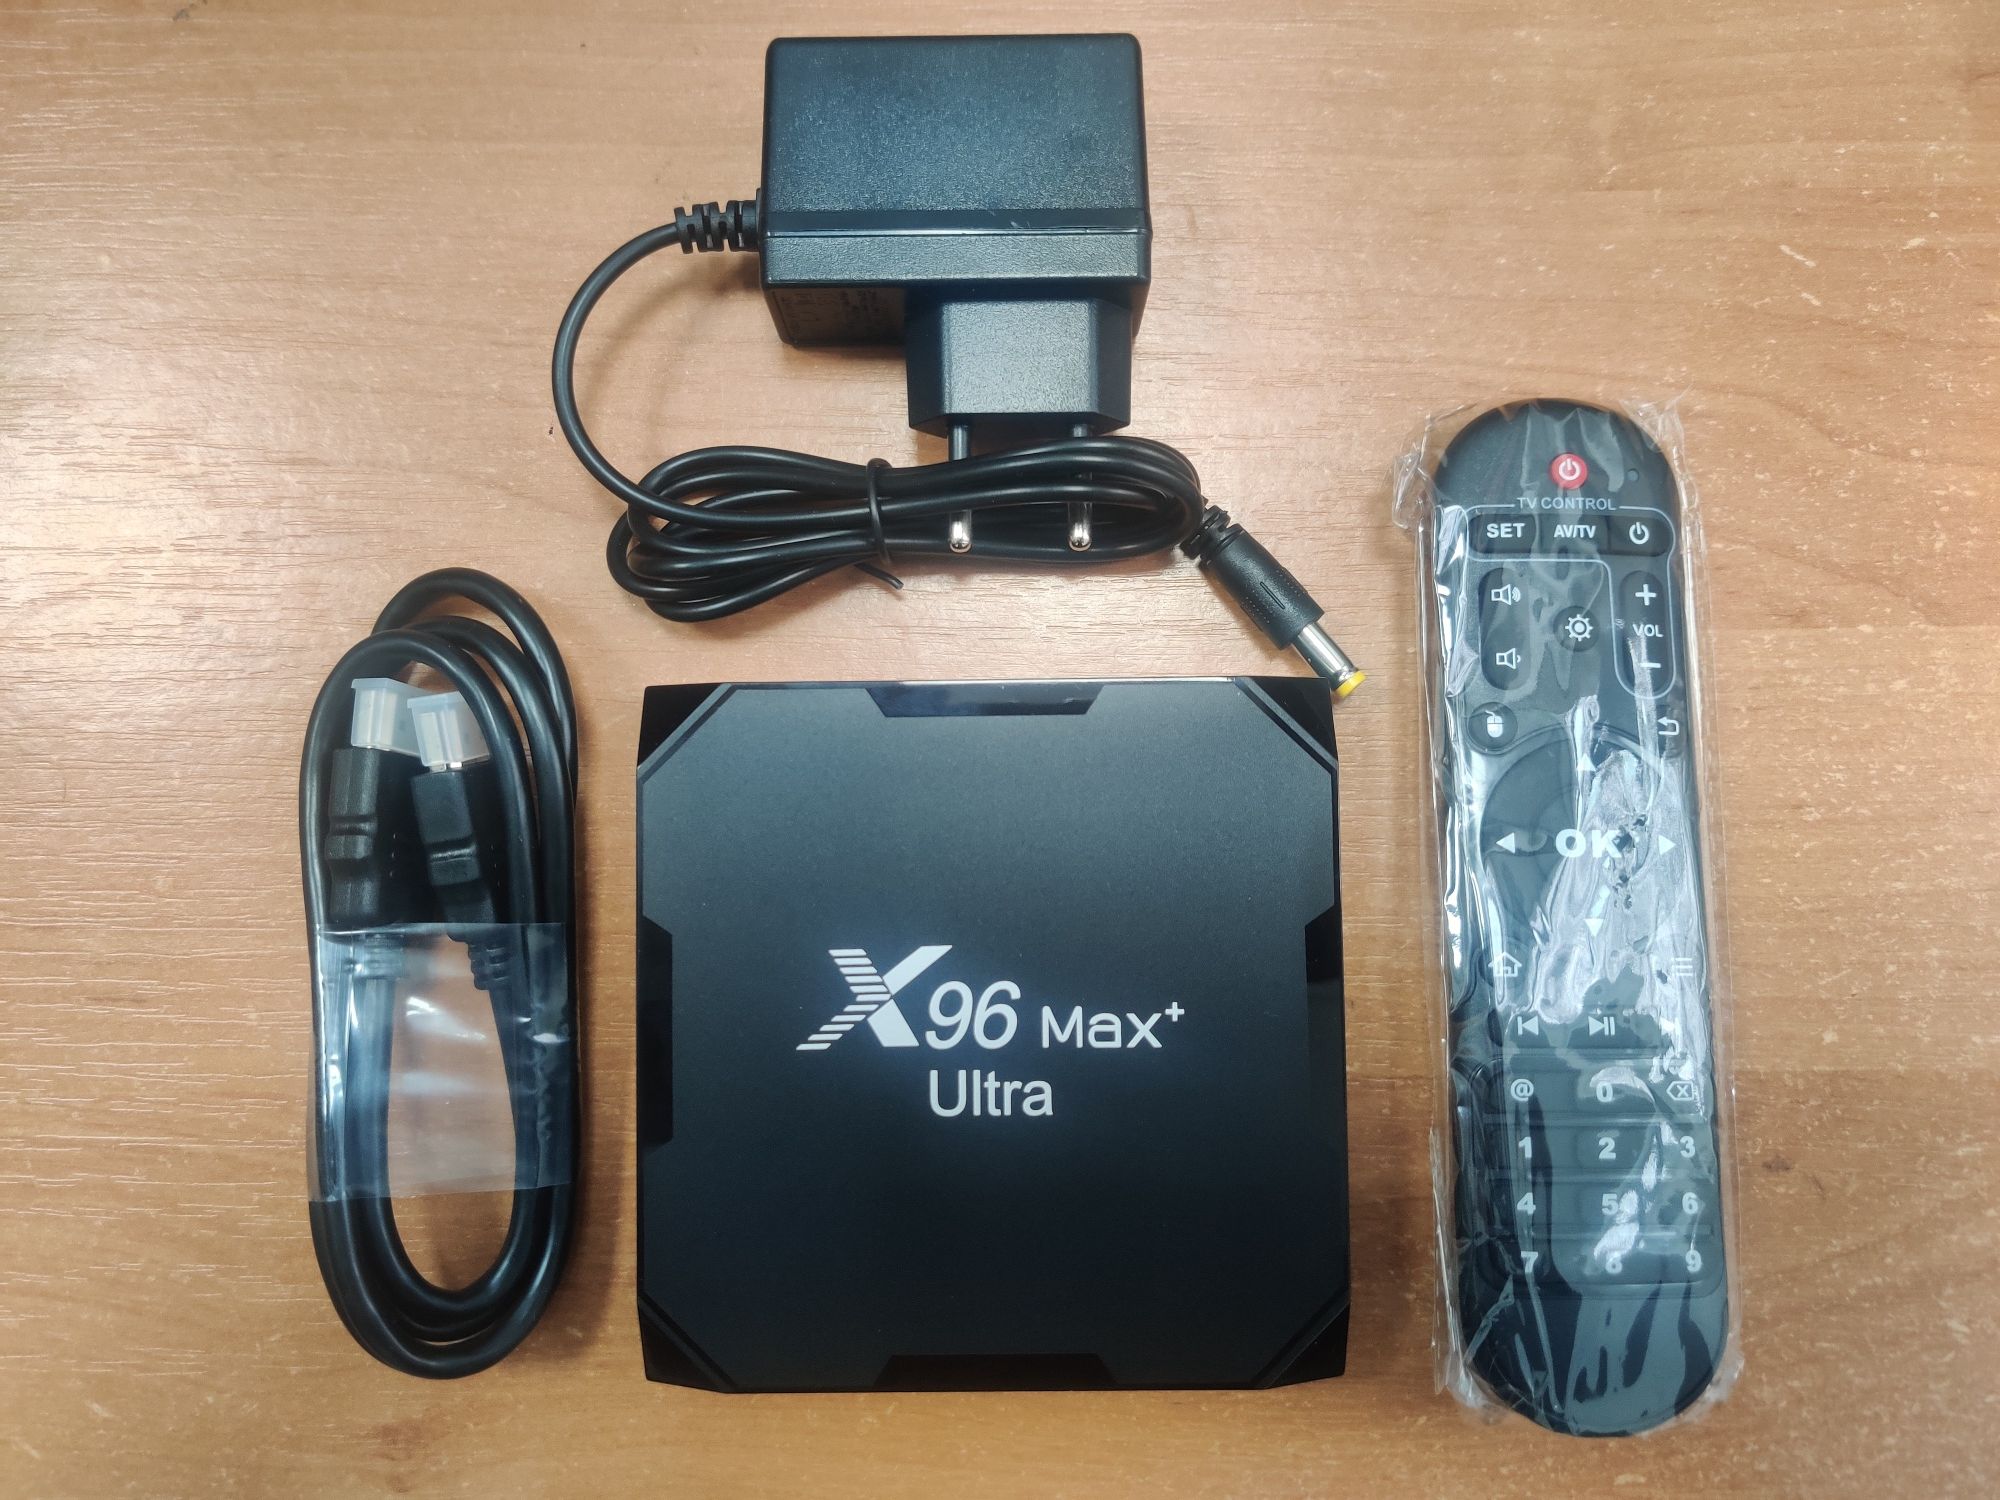 Смарт ТВ приставка Vontar X4, X3, X96 Max+ Ultra, X98 S500, Tanix W2.